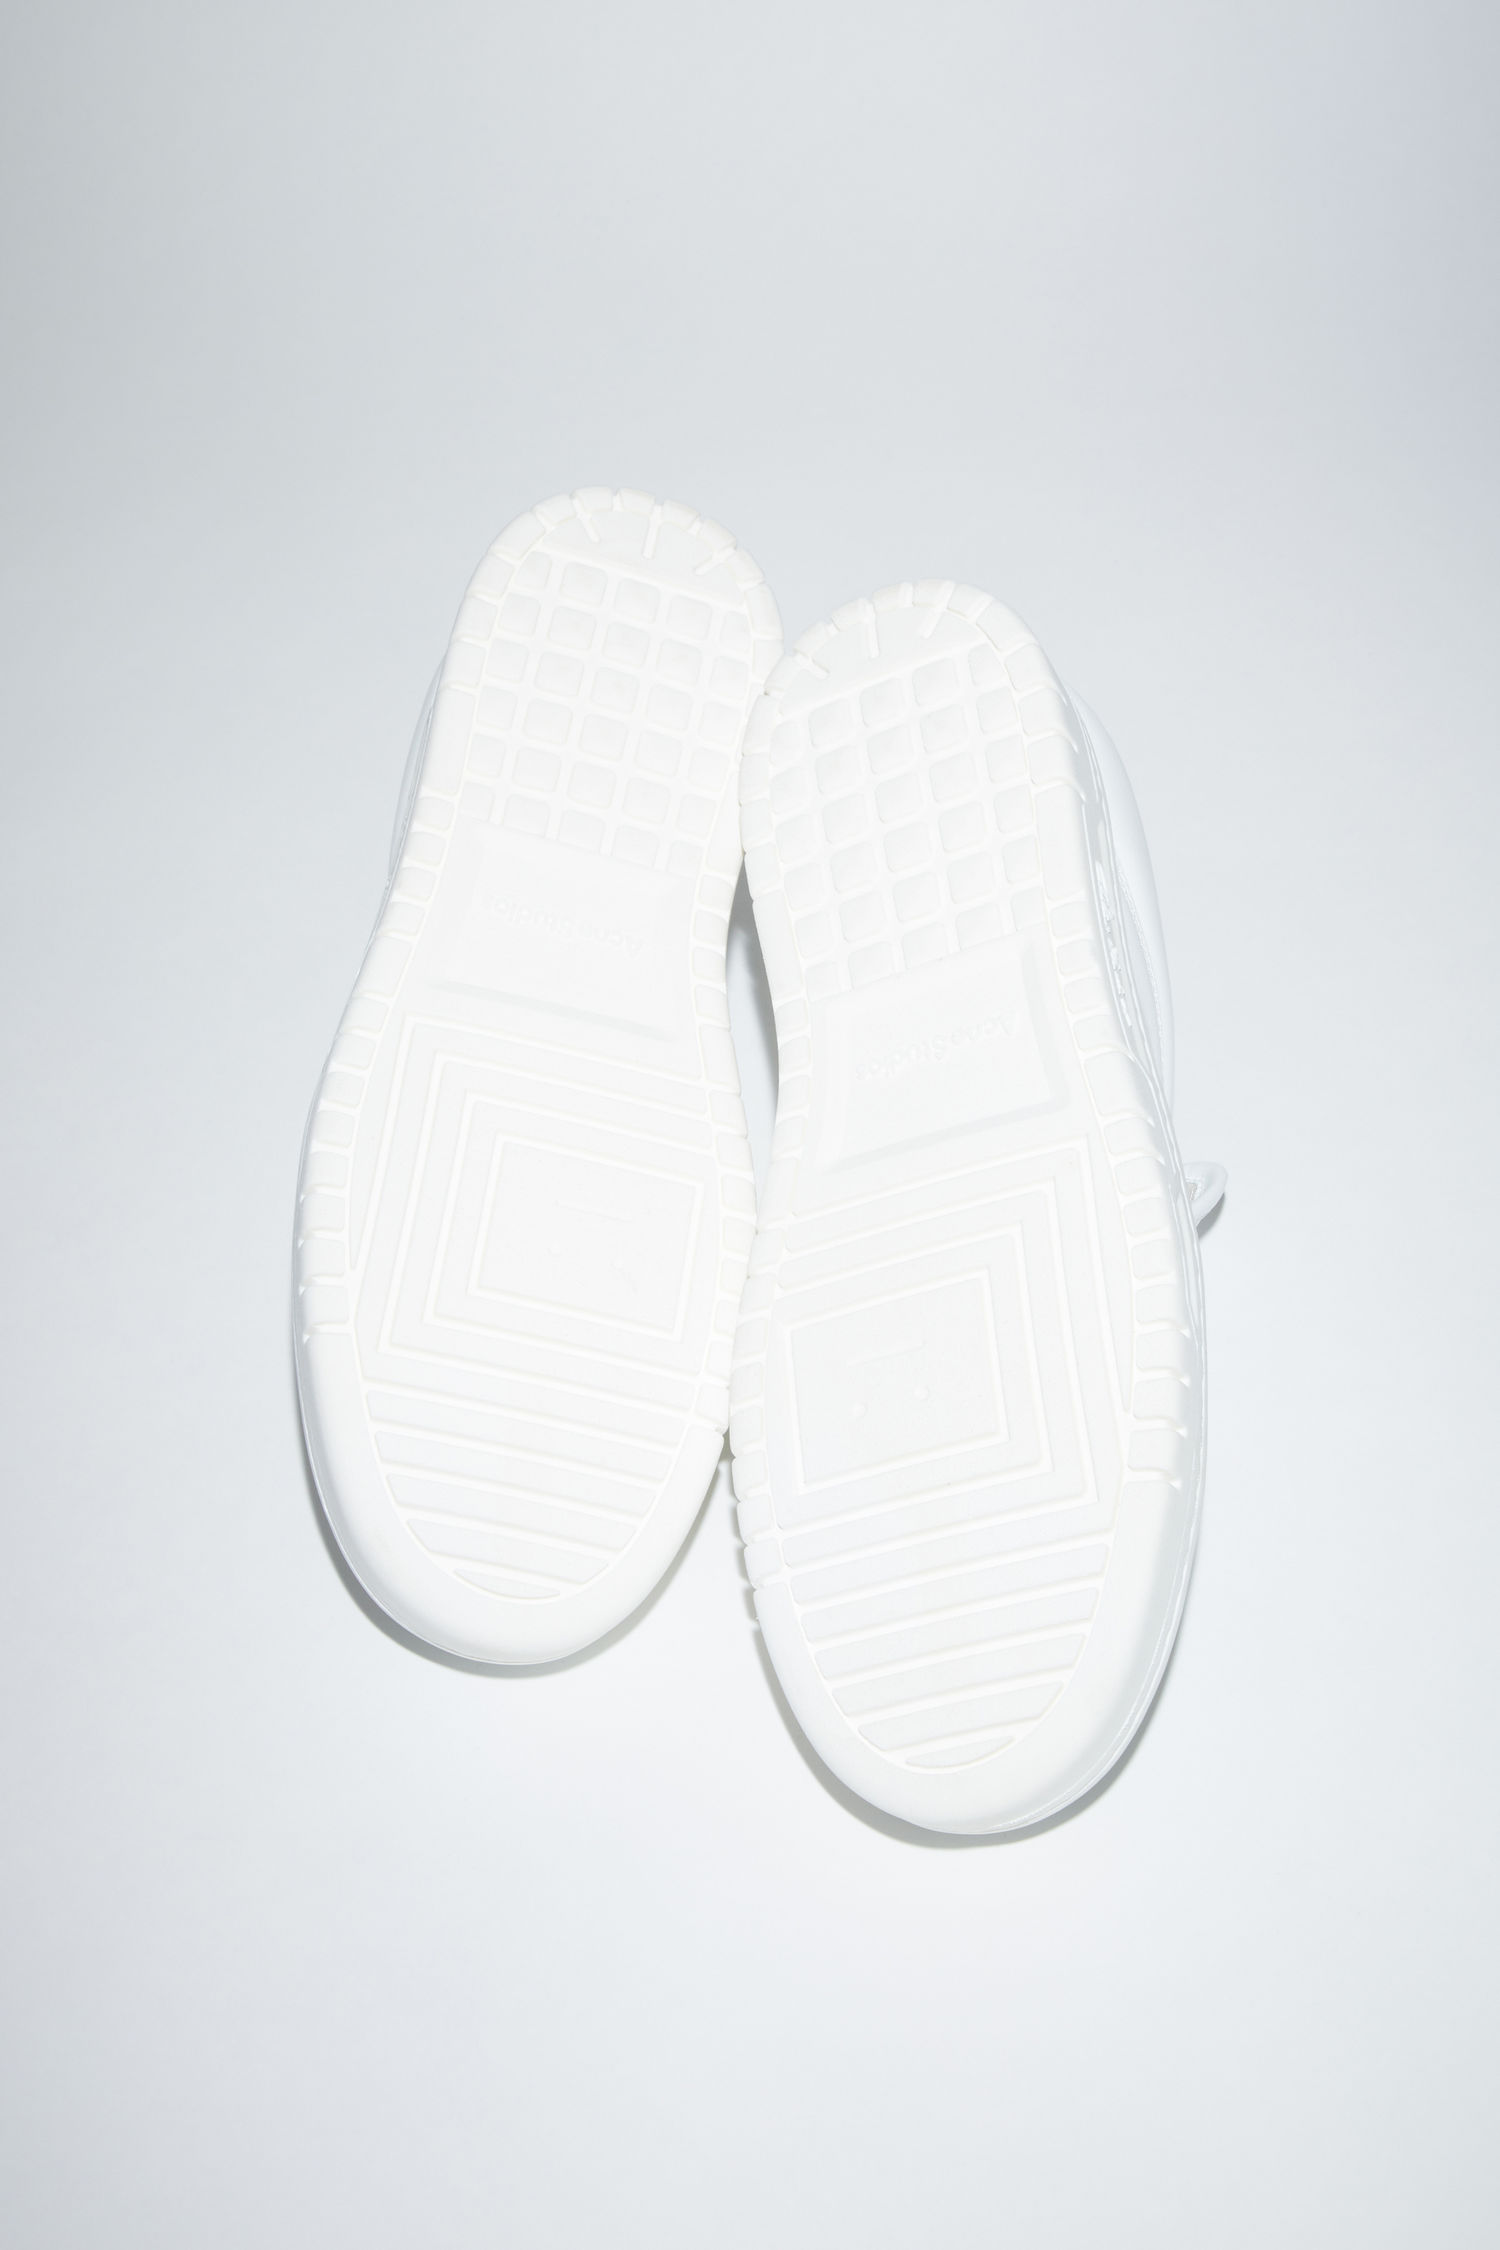 Acne Studios - Slip-on sneakers - White